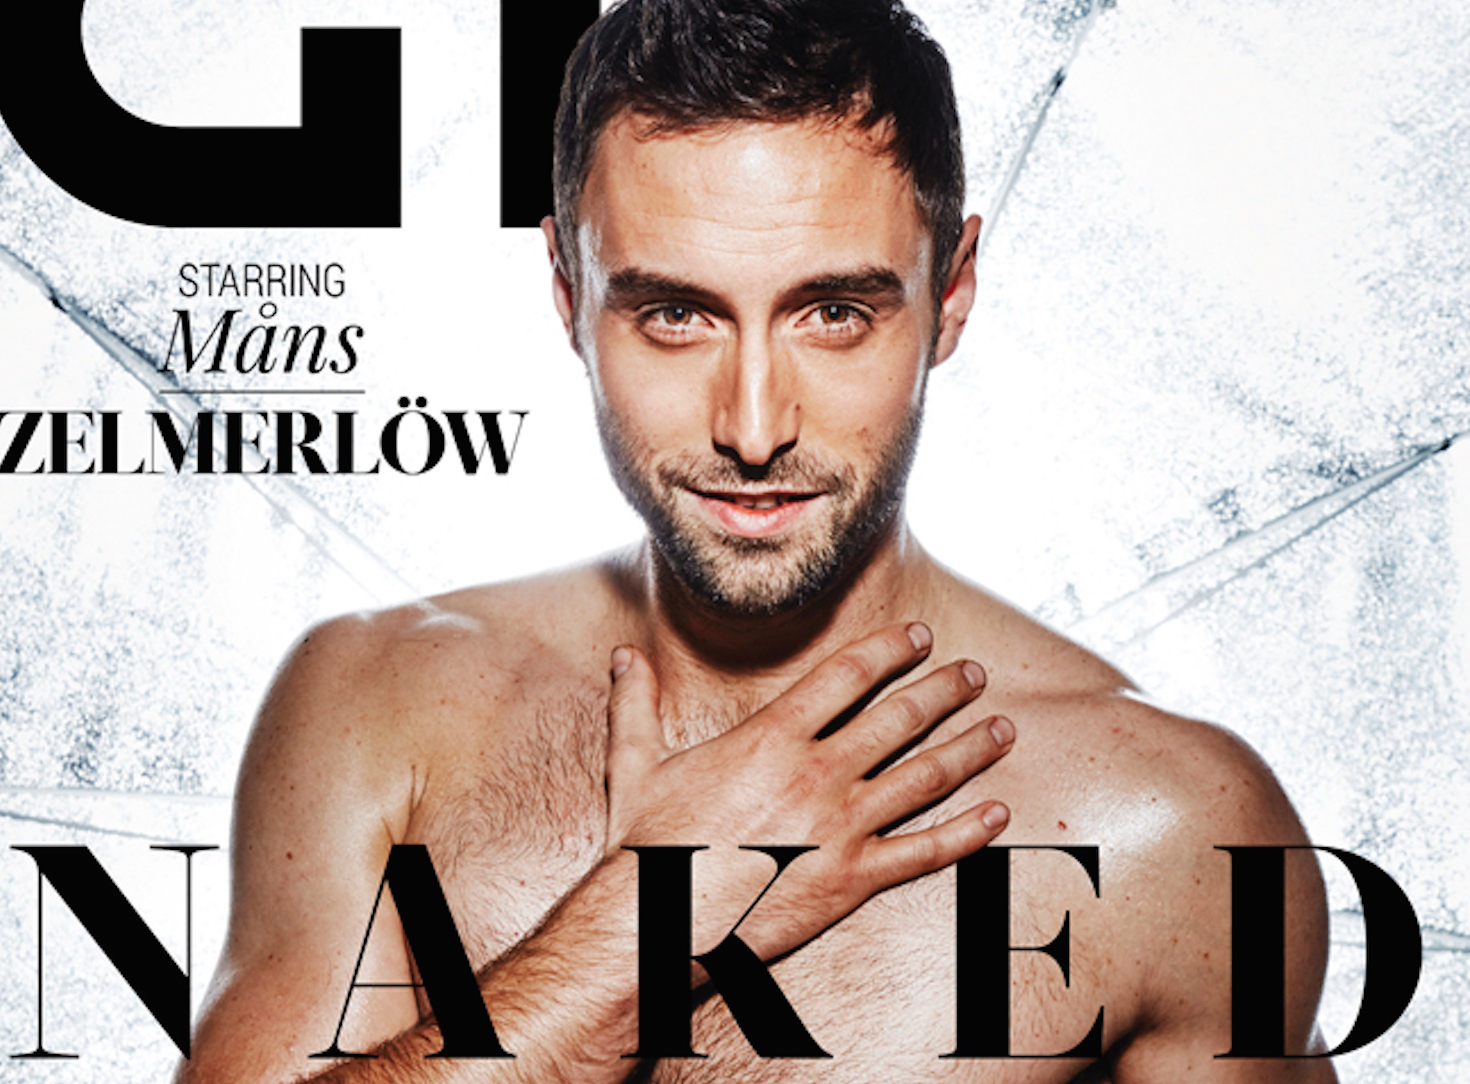 Eurovision winner Måns Zelmerlöw poses naked for gay mag 